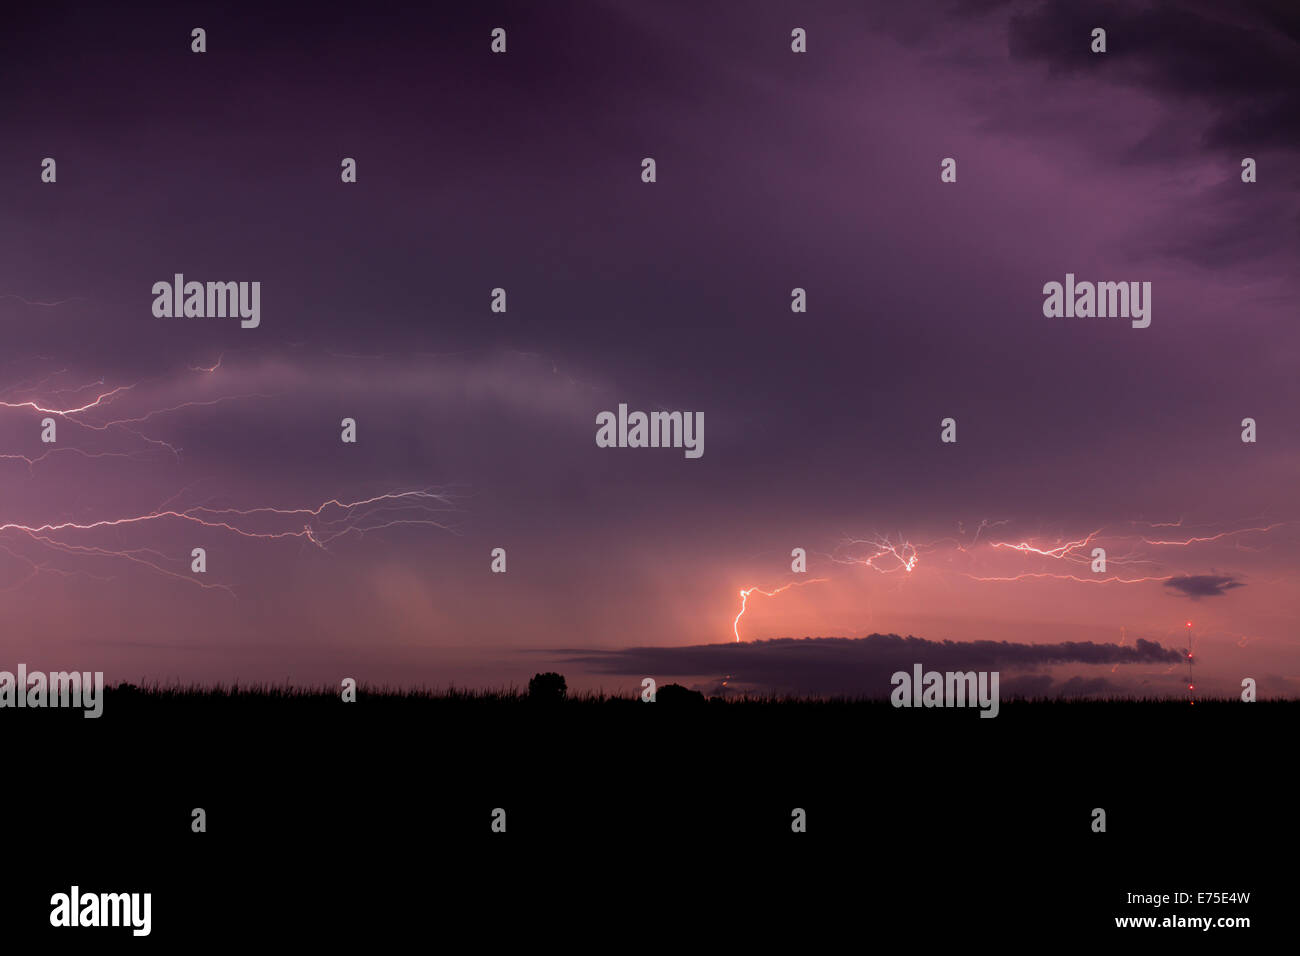 Lightning in a purple sky. Stock Photo